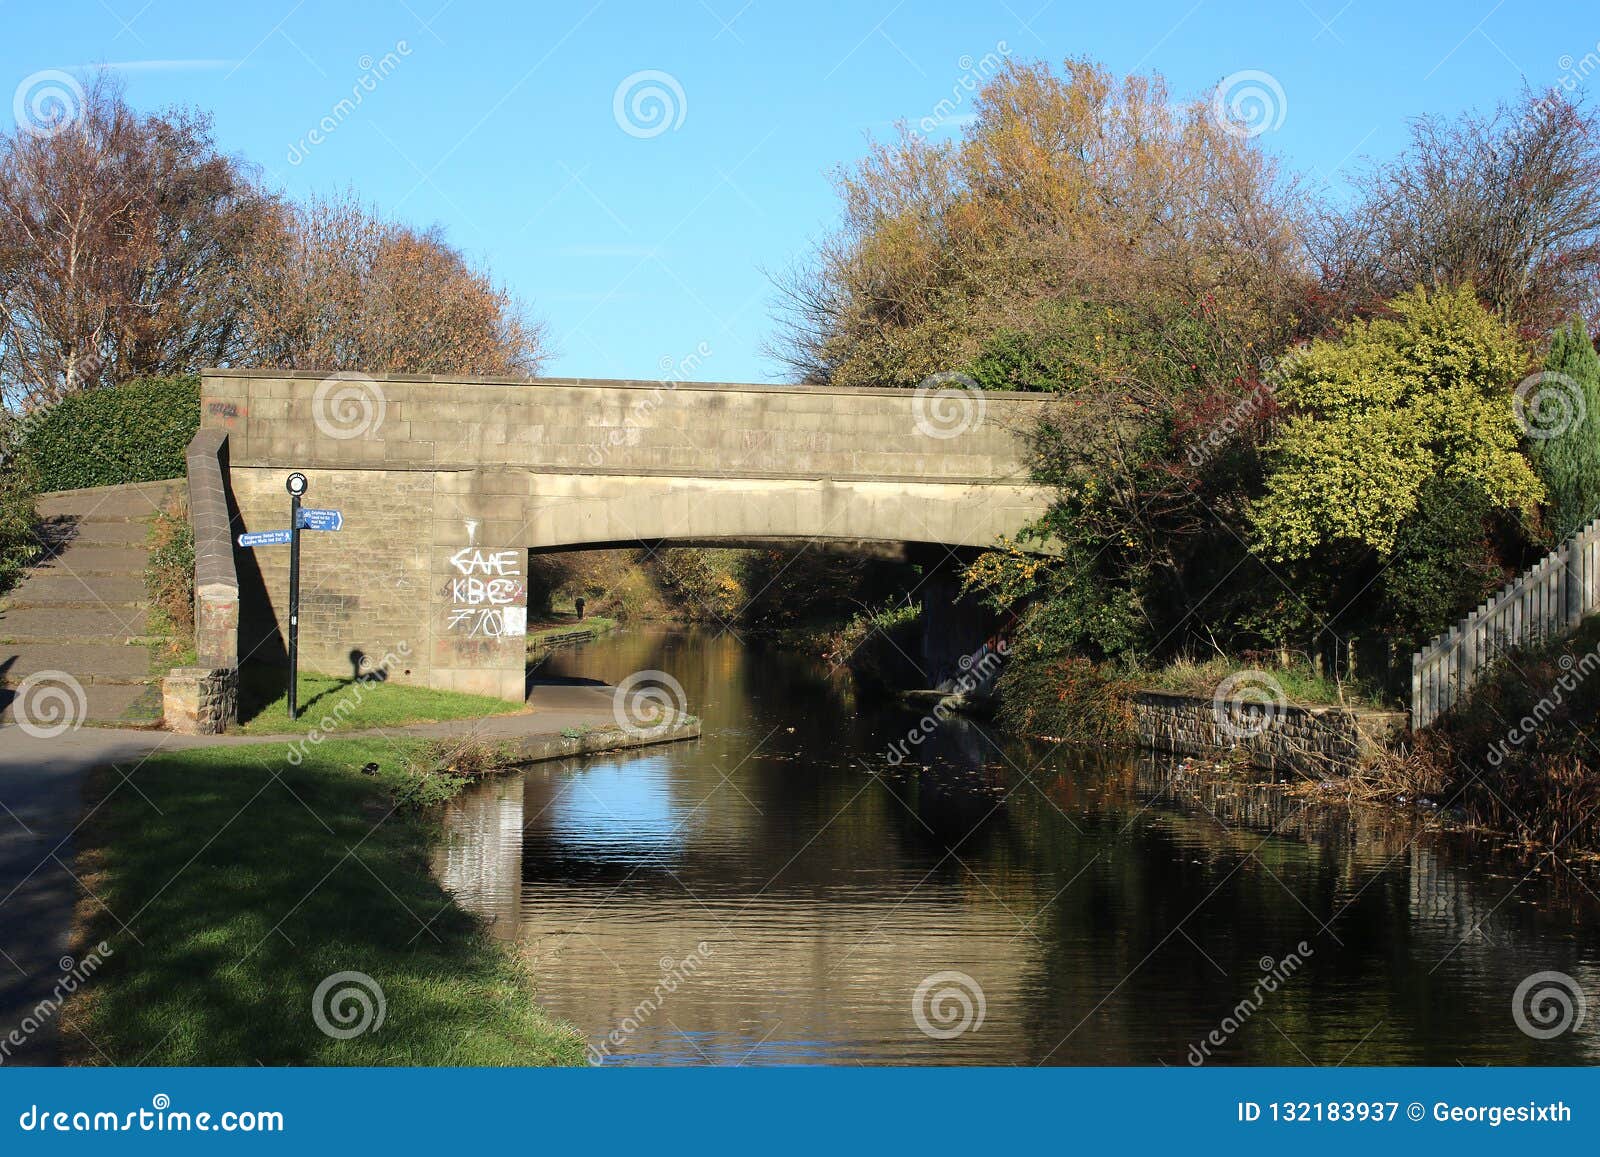 Bridge With Reflection Lancaster Canal Lancaster Stock Image Image Of Graffiti Bridge 132183937